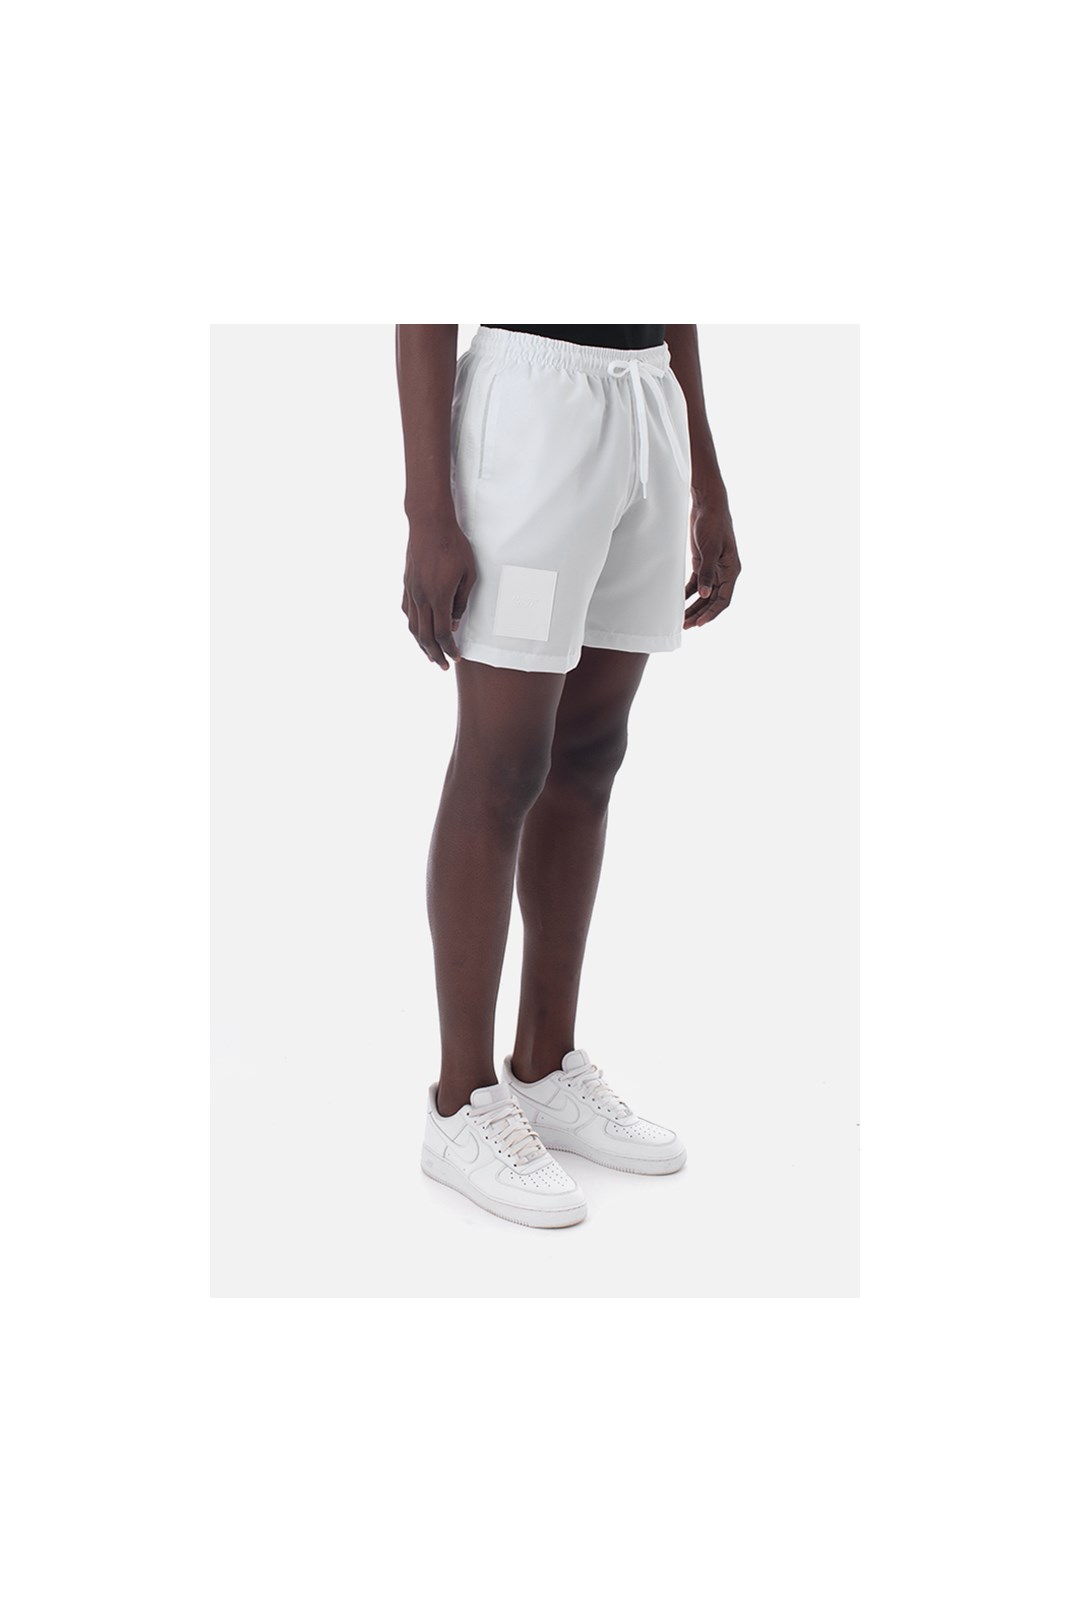 Shorts Approve Yrslf Branco